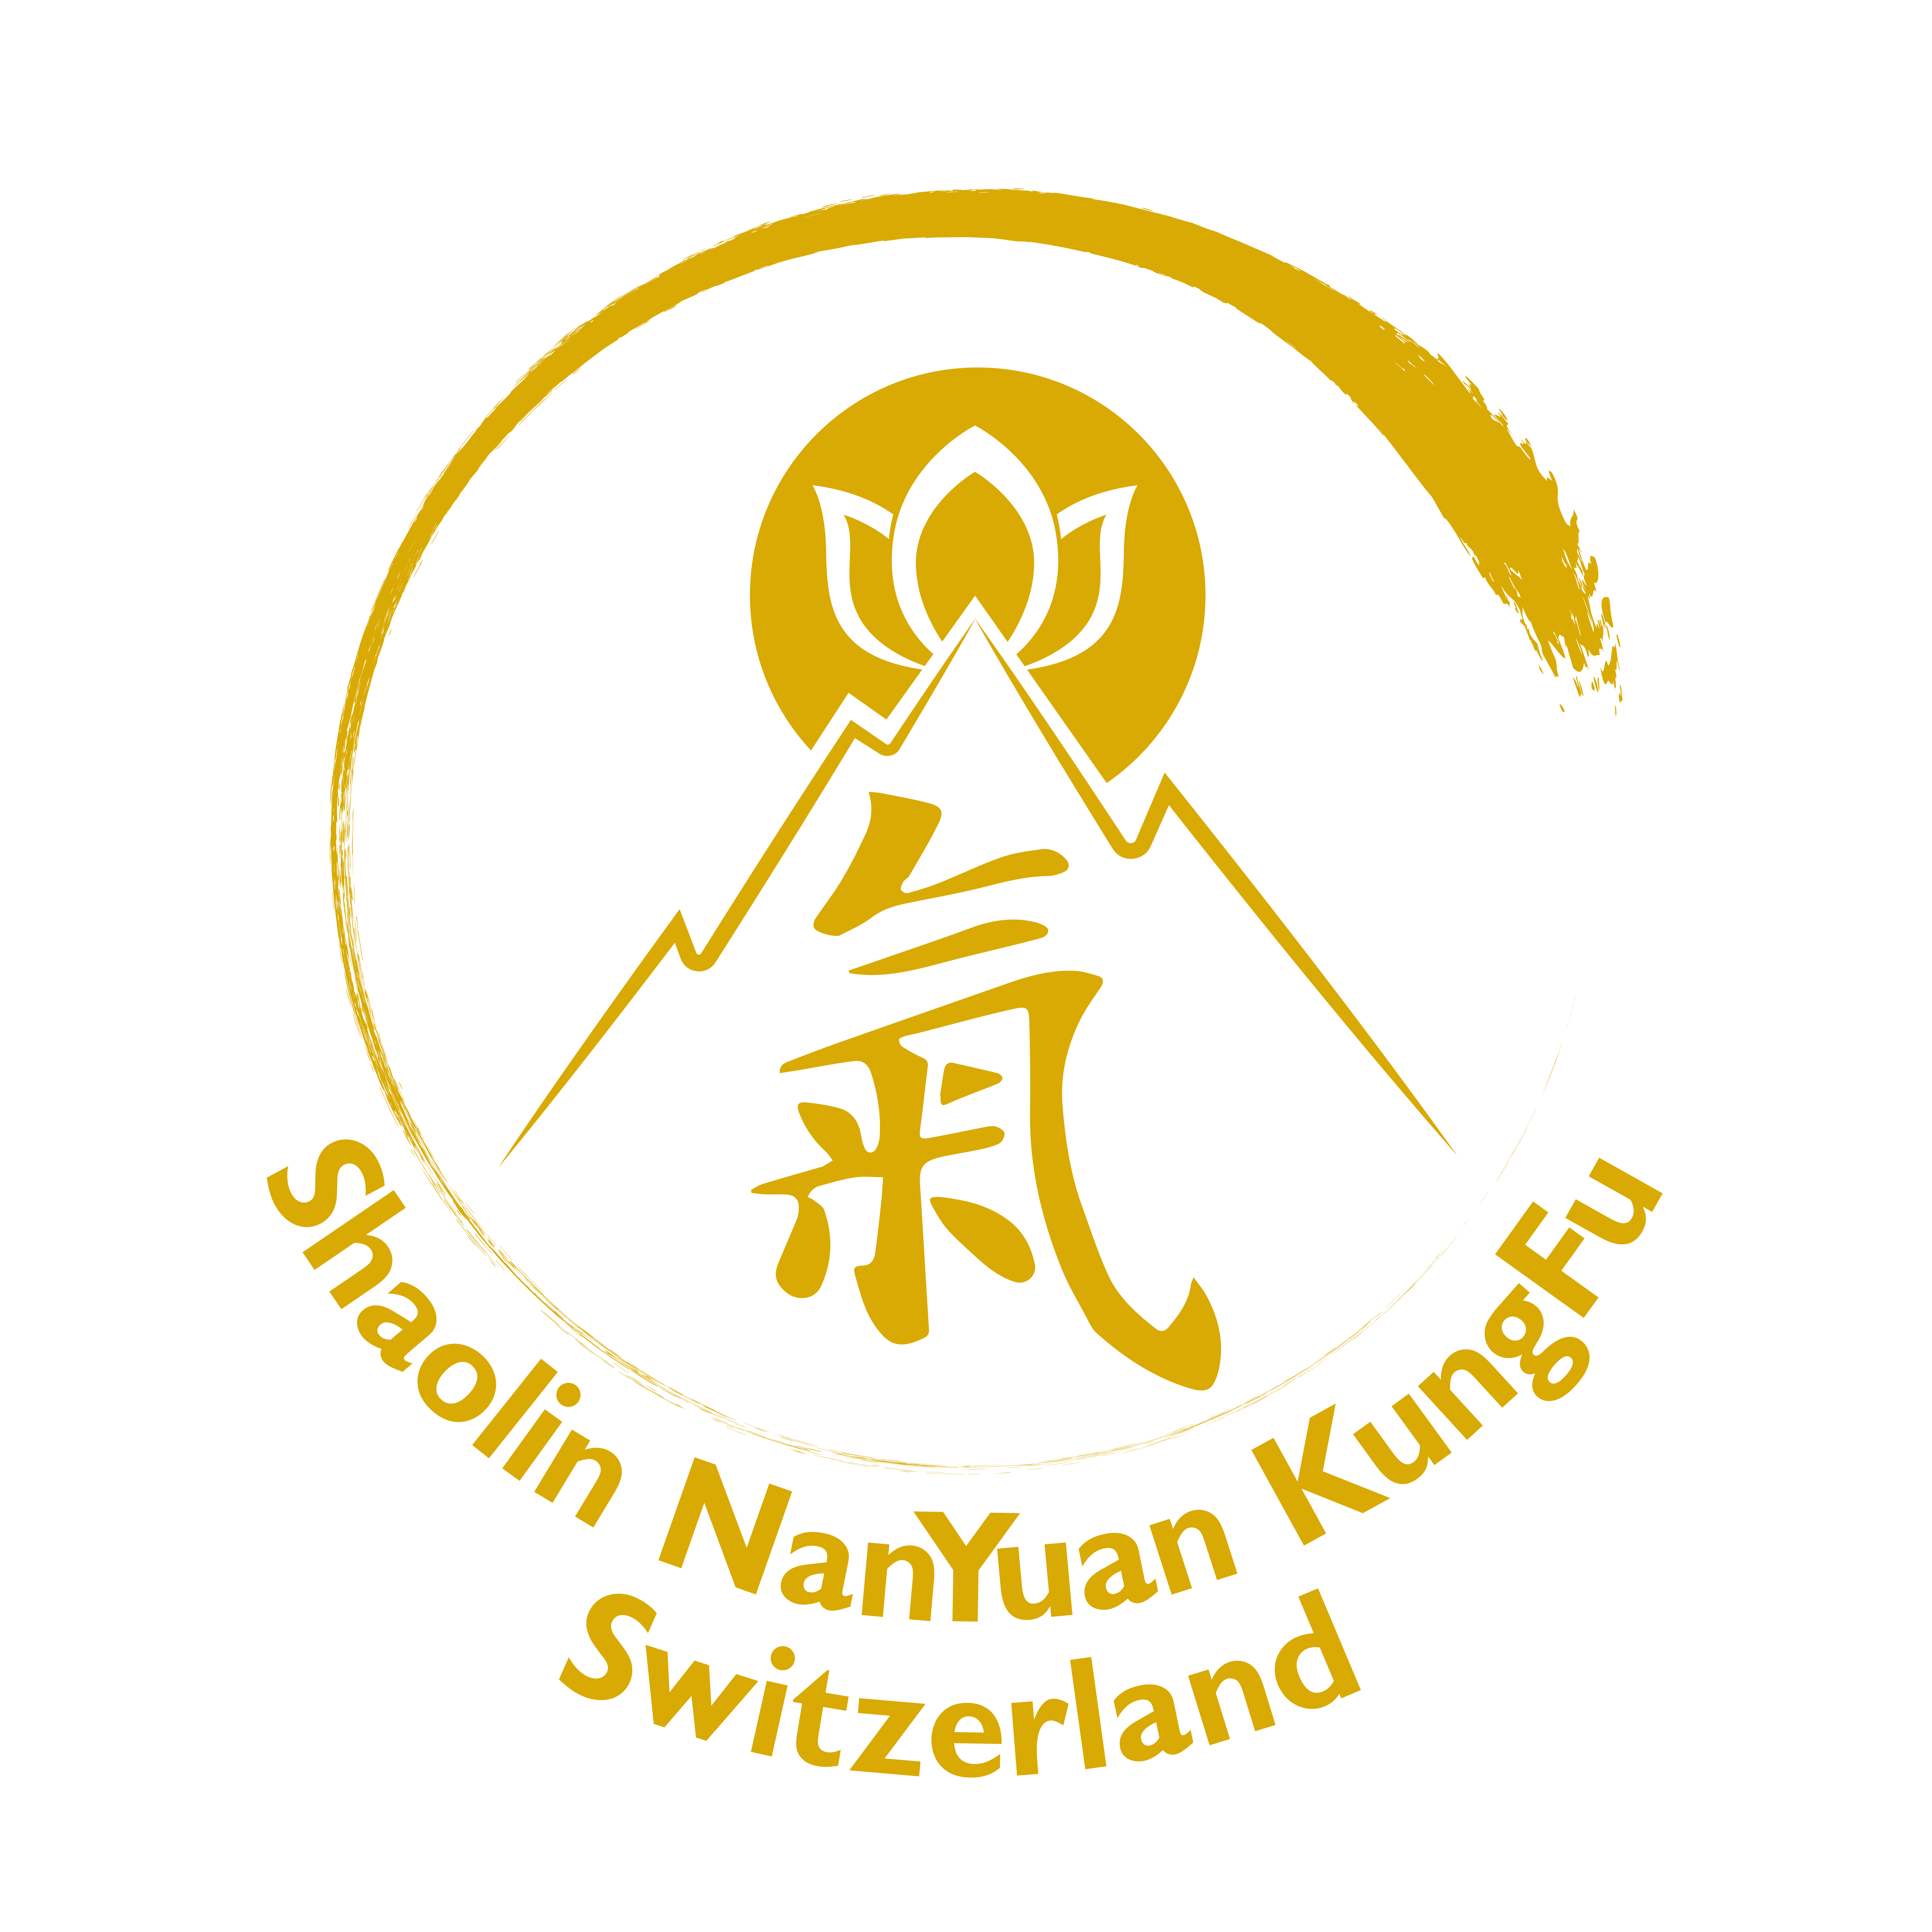 Shaolin NanYuan KungFu Switzerland